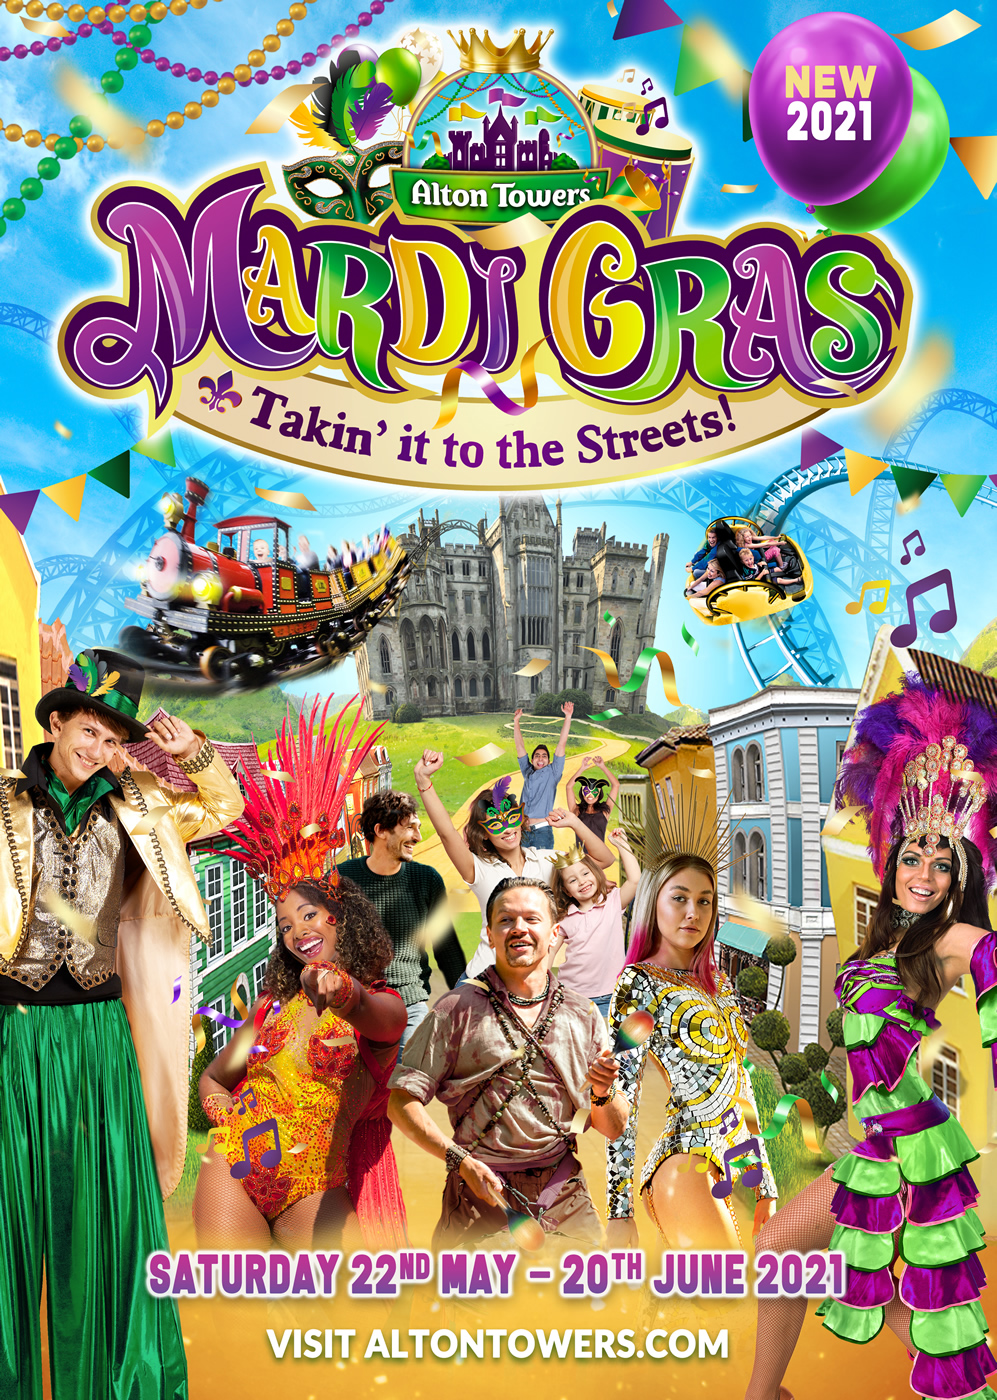 Alton Towers Resort reveal details of new Mardi Gras event - TowersTimes